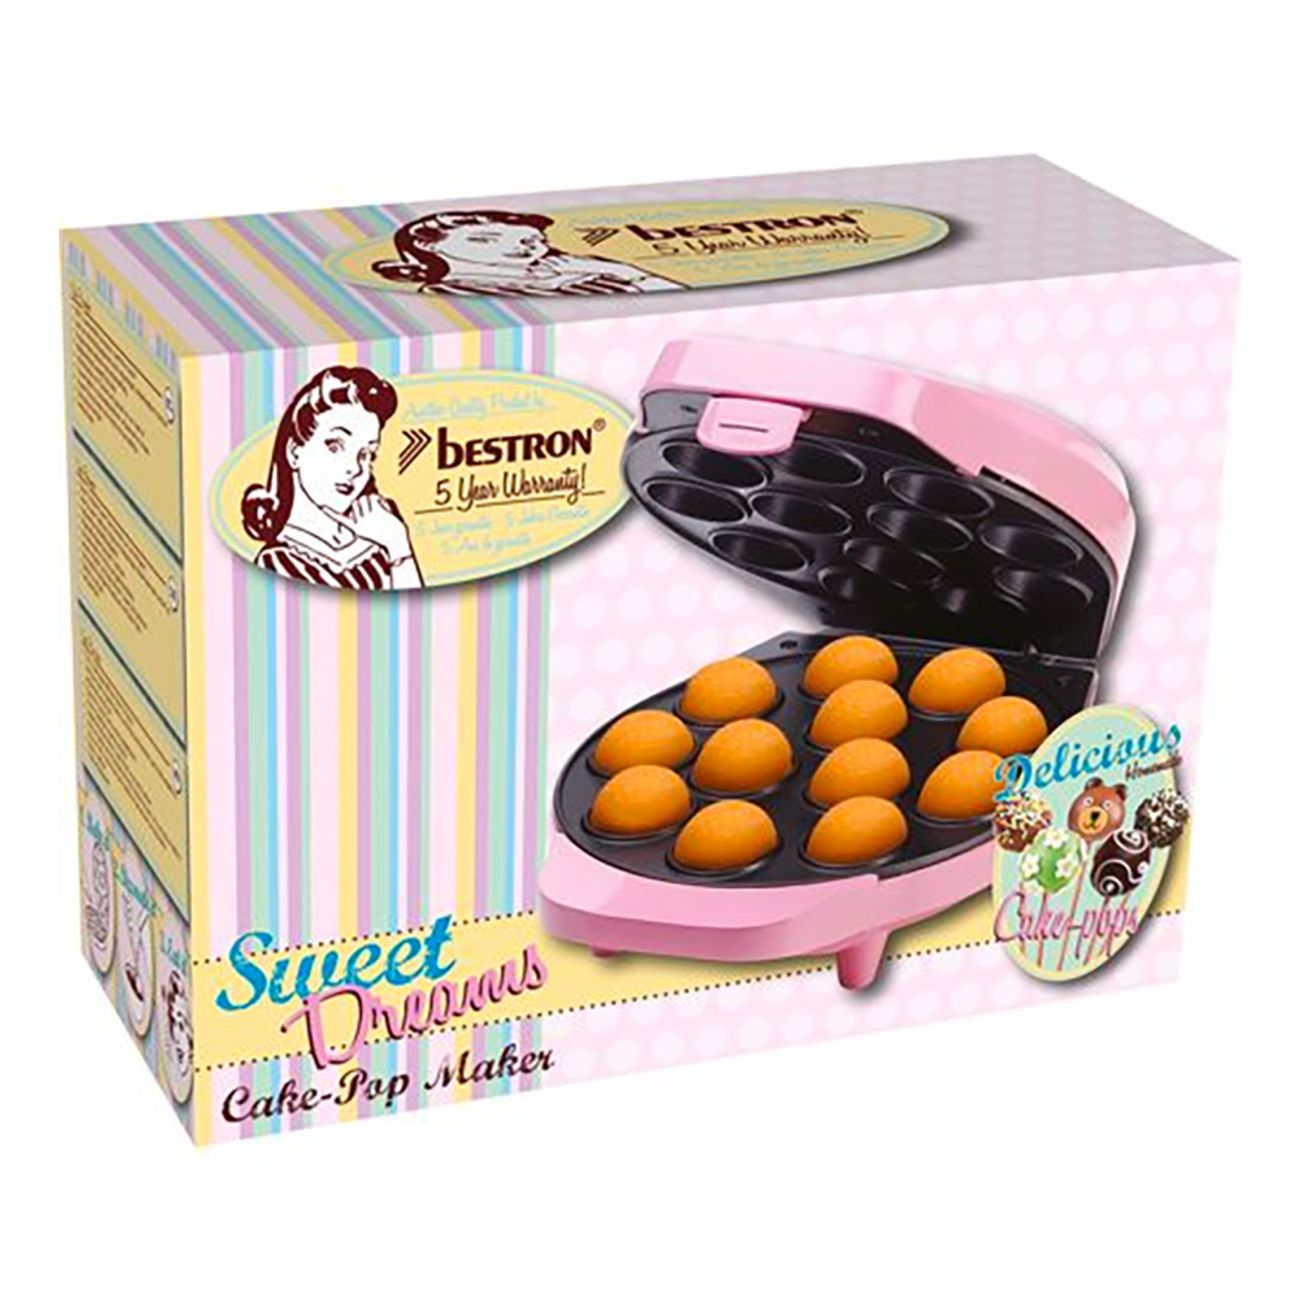 bestron-cake-pop-jarn-rosa-84067-2